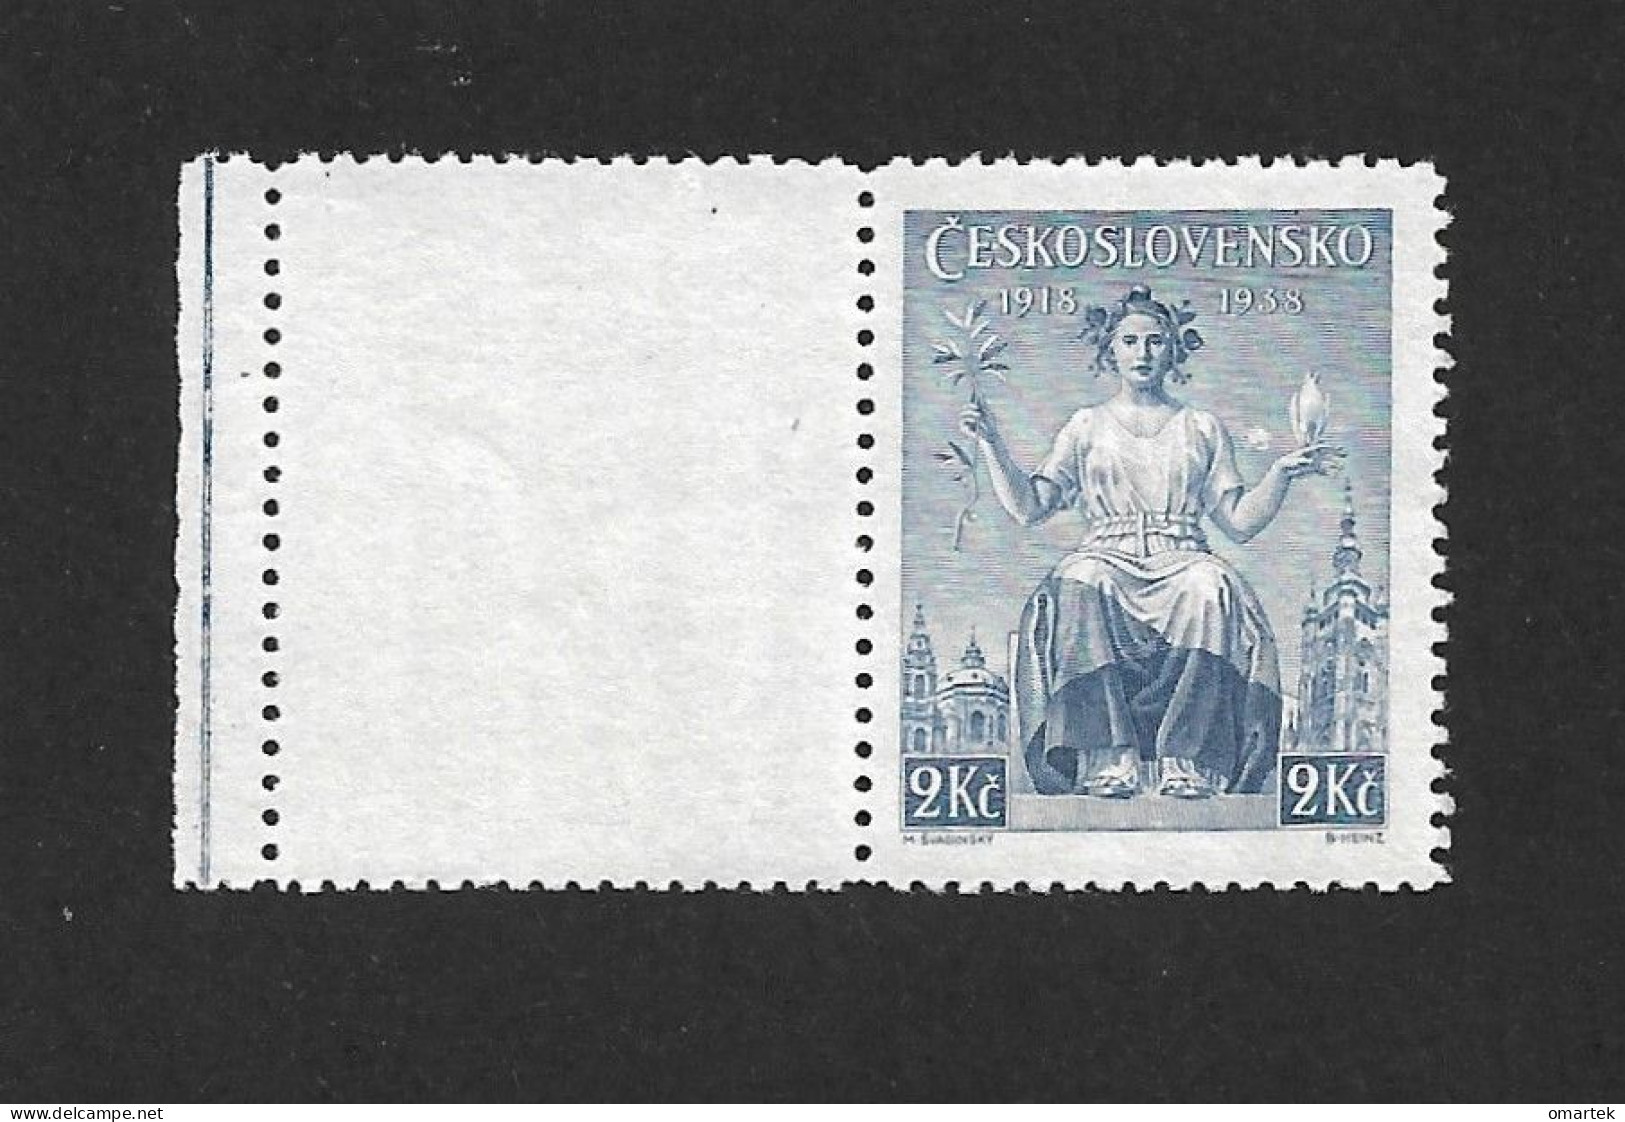 Czechoslovakia 1938 MNH ** Mi 404 Zf L Sc 254 Alegory Of The Republic With Coupon. Tschechoslowakei C1 - Nuevos